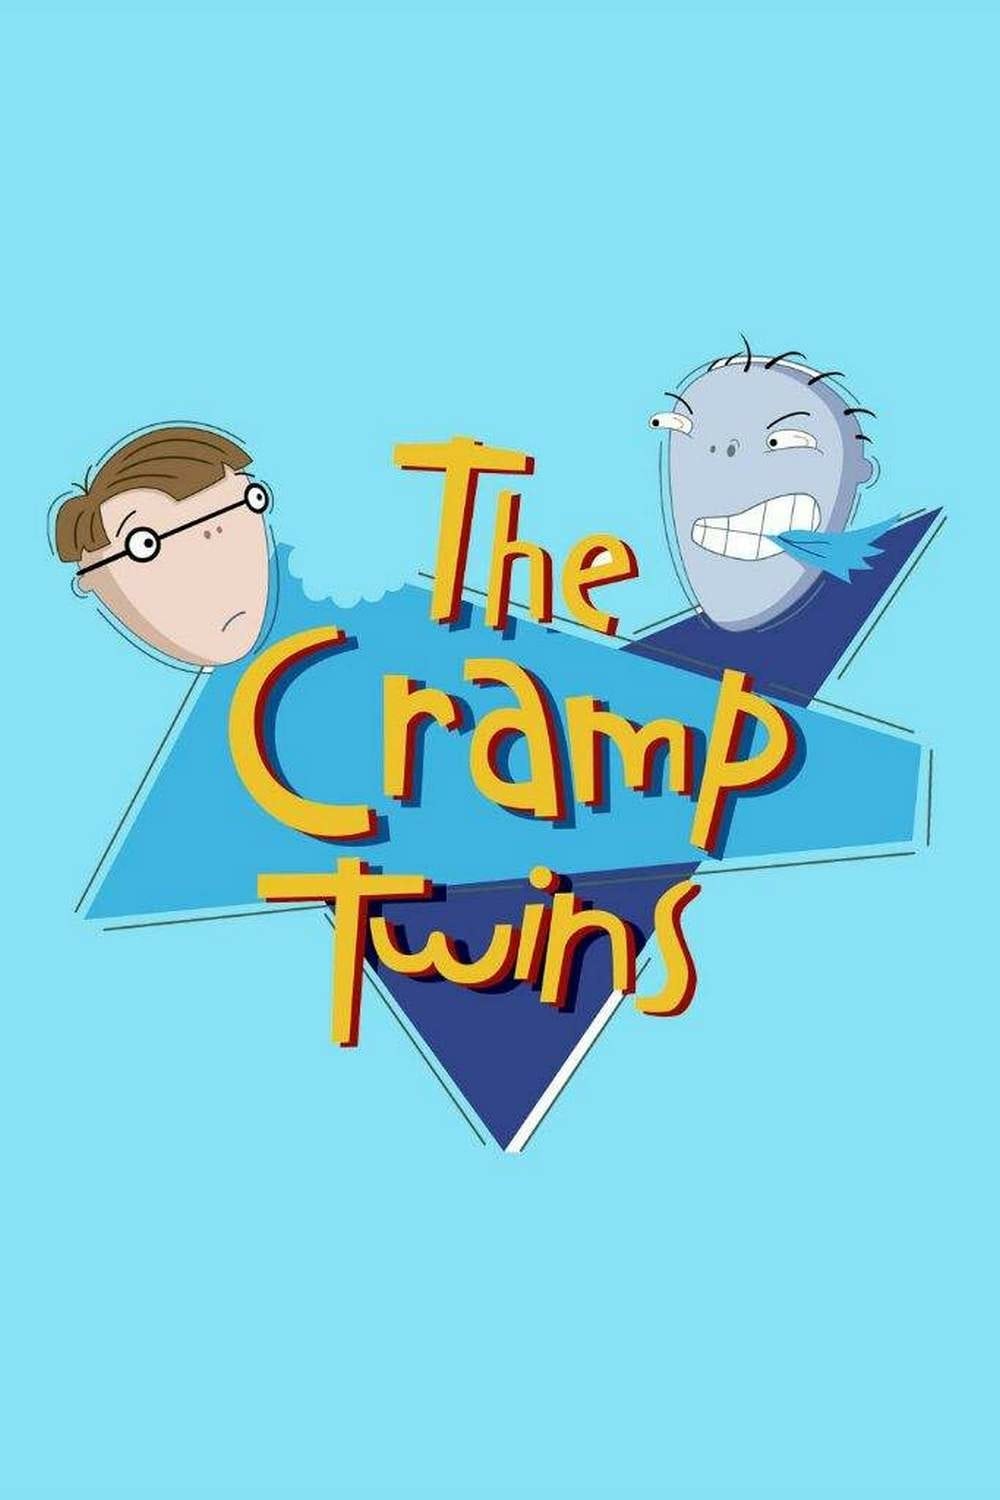 Cramp Twins